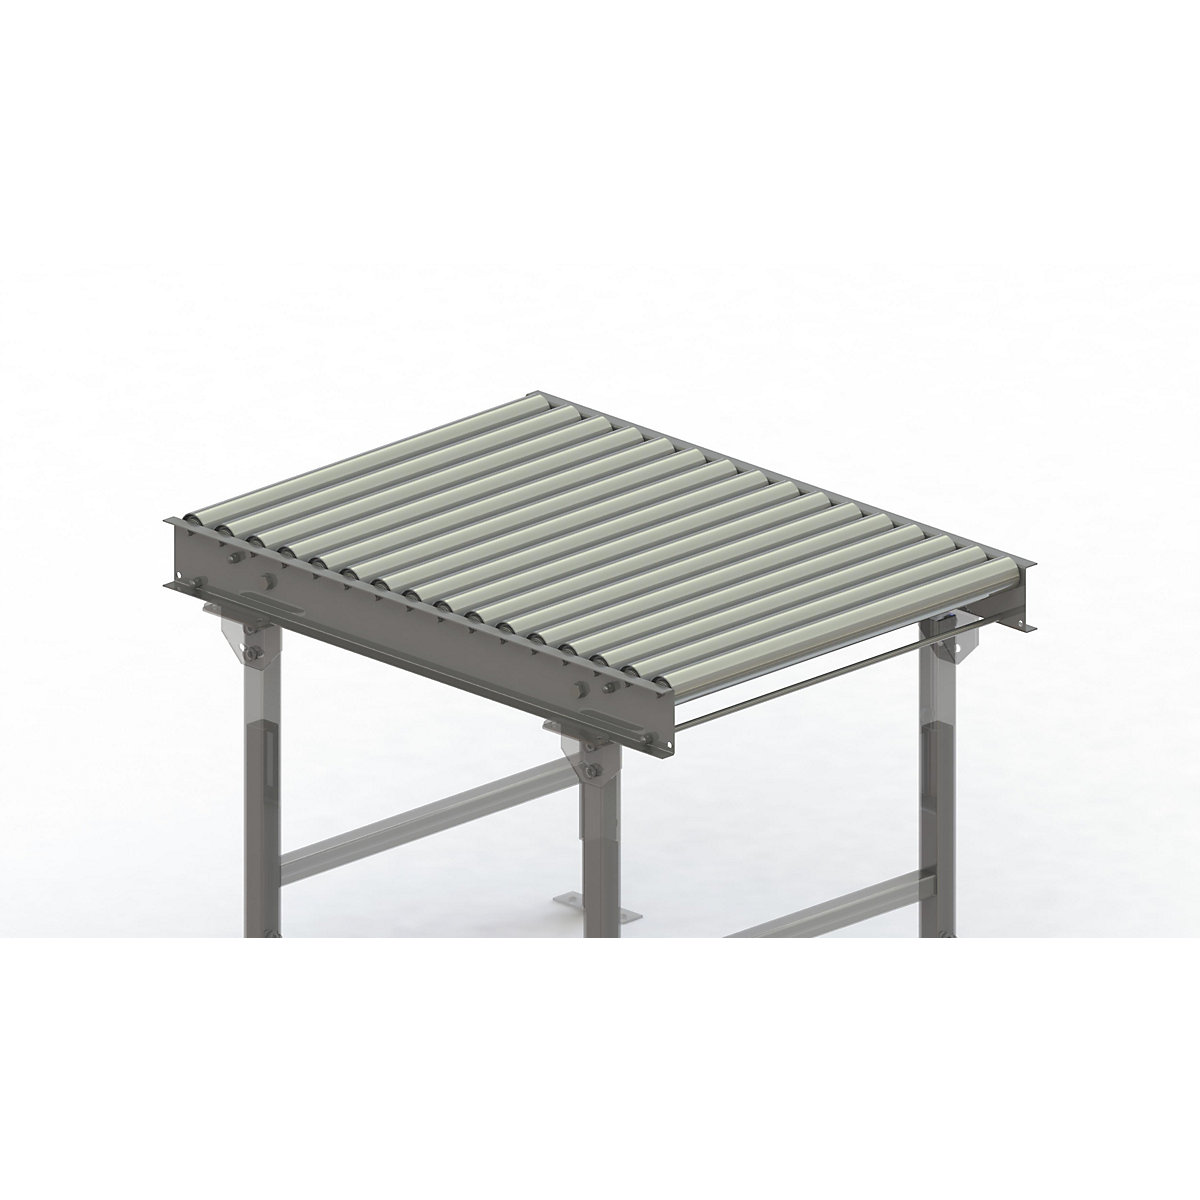 Gura – Roller conveyor, steel frame with zinc plated steel rollers, track width 750 mm, distance between axles 62.5 mm, length 1 m